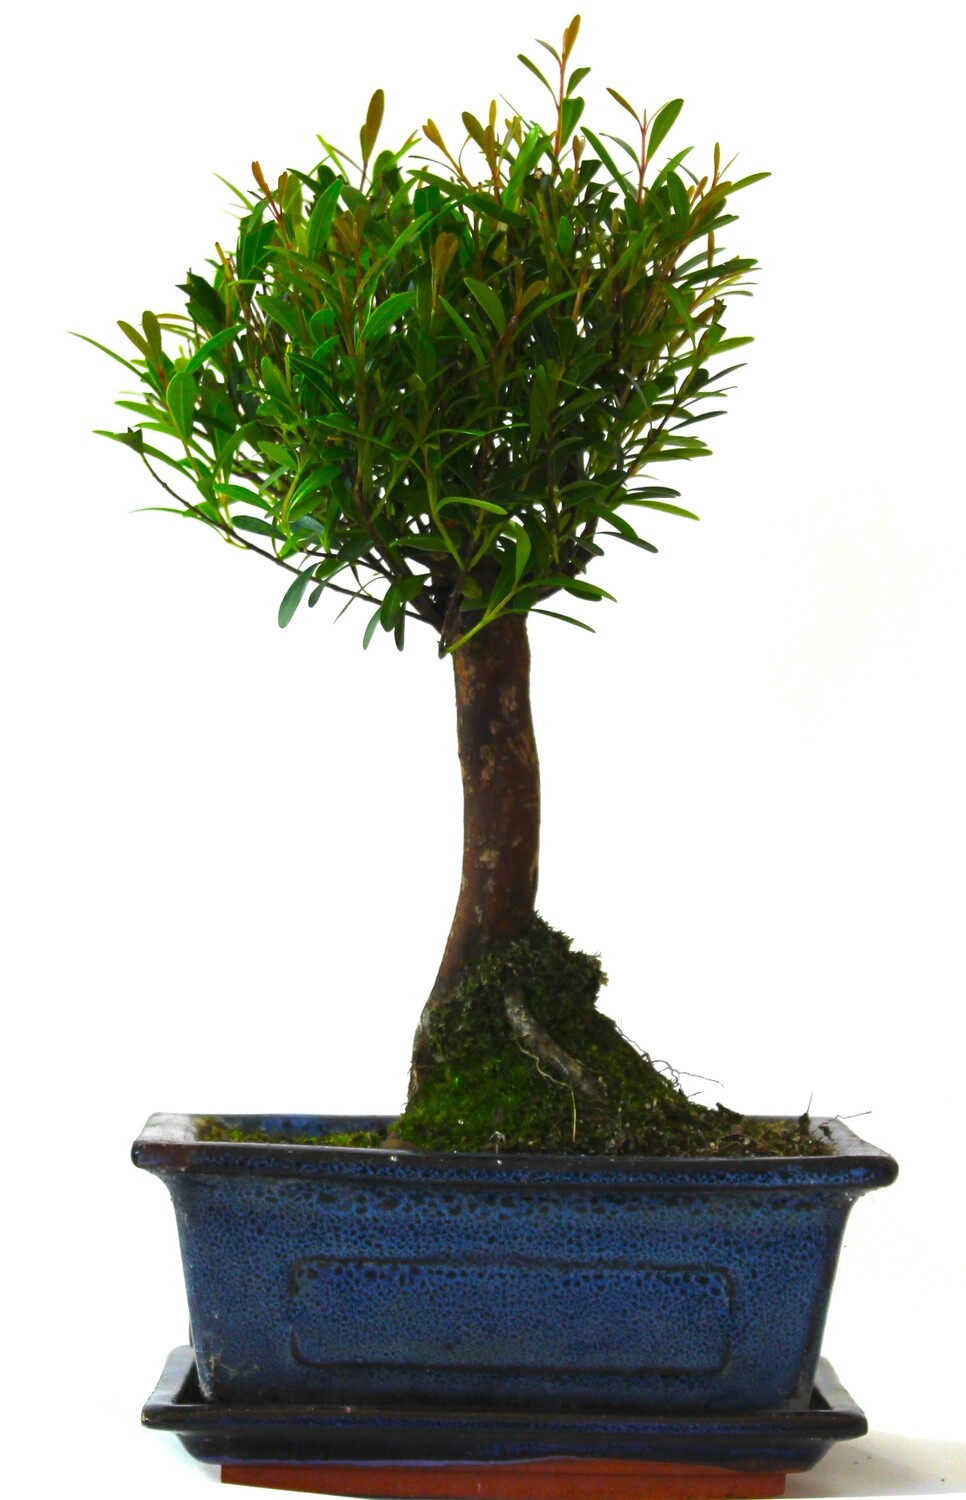 Syzigium (Brush Cherry) Bonsai Tree Broom Style - supplied with ceramic drip tra